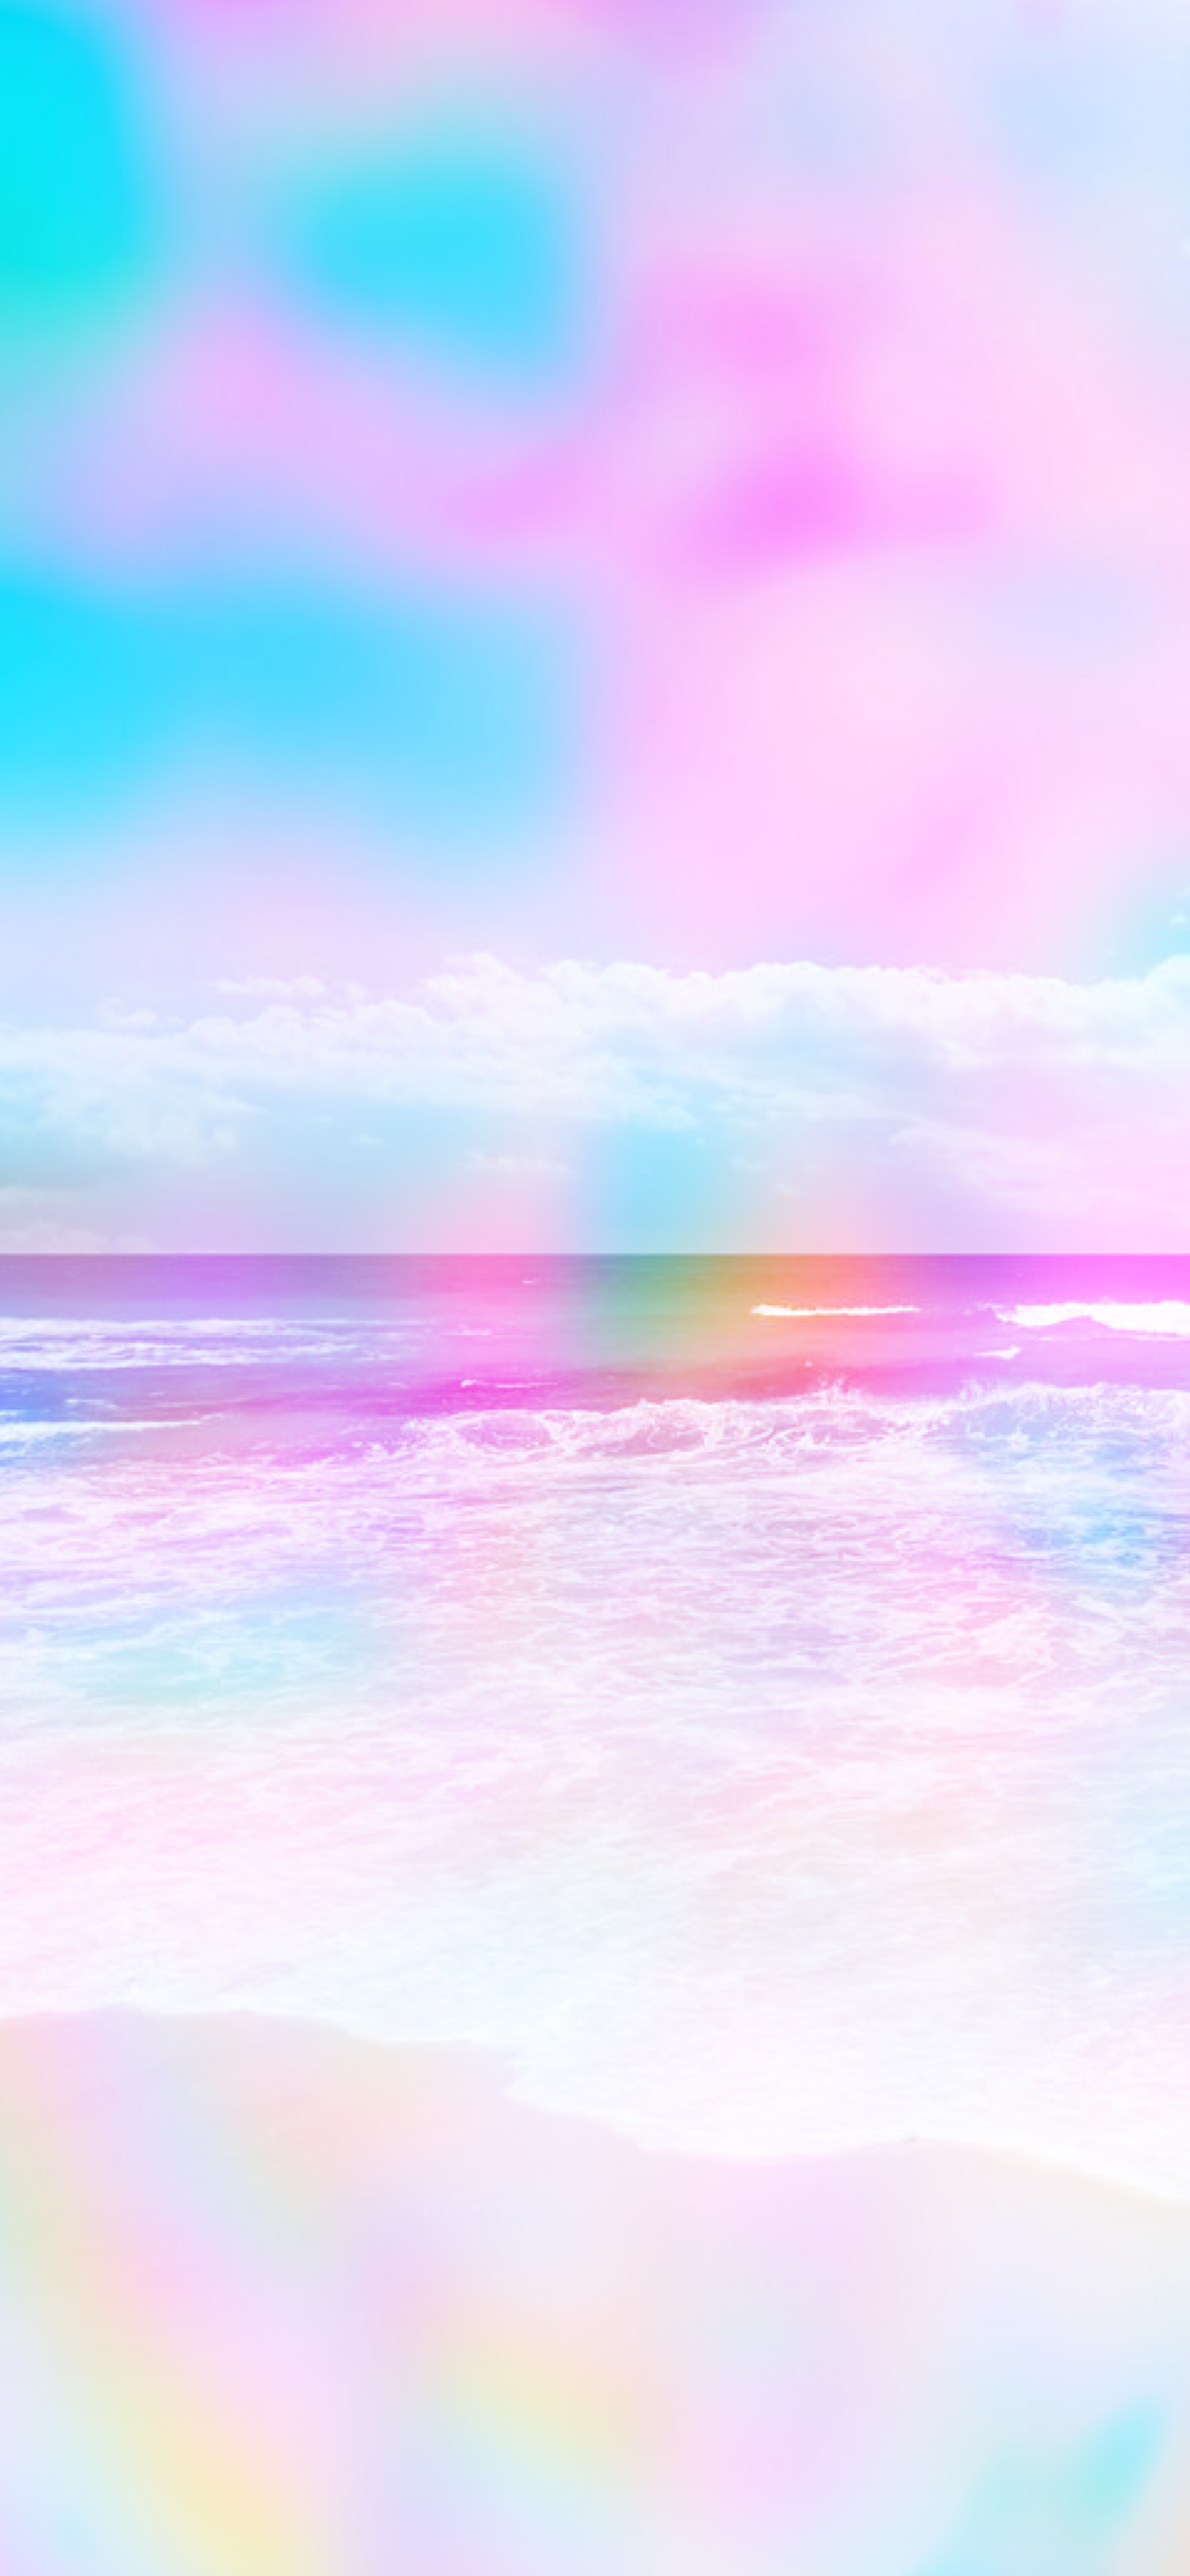 Beach Rainbow Wallpaper. Rainbow wallpaper iphone, Rainbow wallpaper, Beach wallpaper iphone